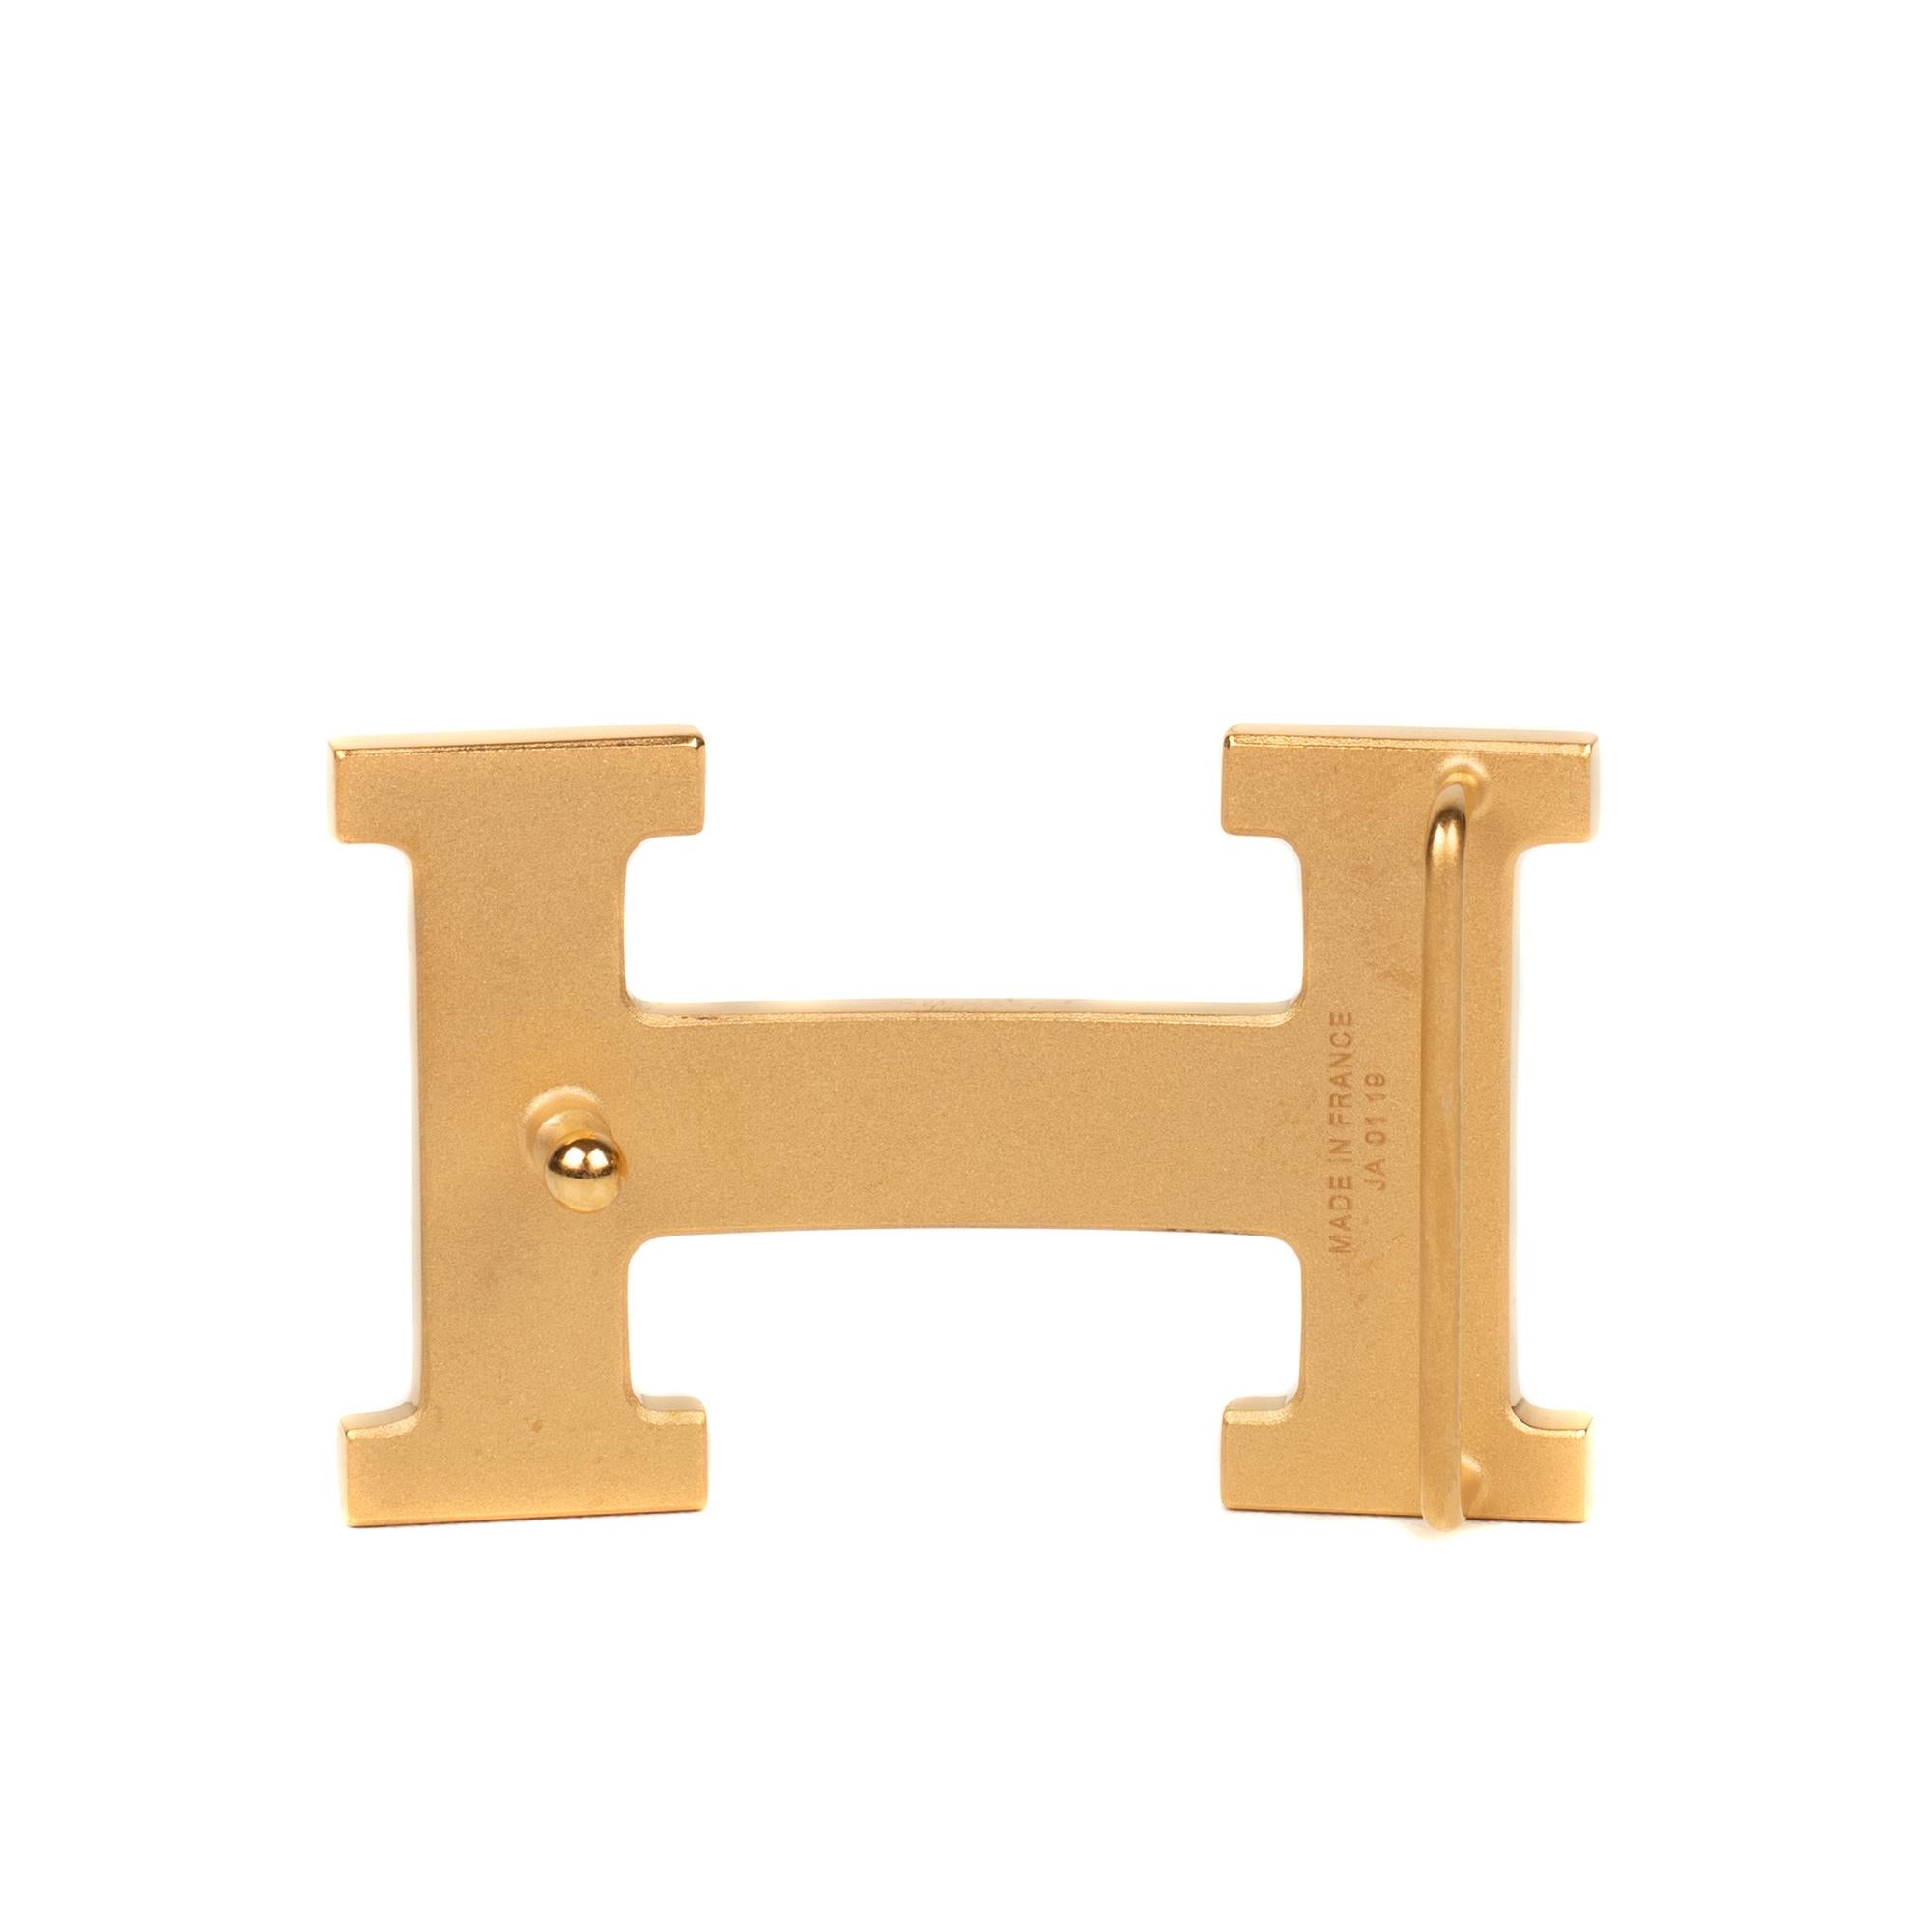 Type: Belt buckle 
Brand: Hermès
Model: Calandre
Material: Brilliant steel
Color: Golden
Signed HERMES on the slice 
Form: HPour leather link 3.2 cm wide (leather link not included)
Dimensions: H: 3.7 x W: 6 x D: 1.4 cm
Never worn